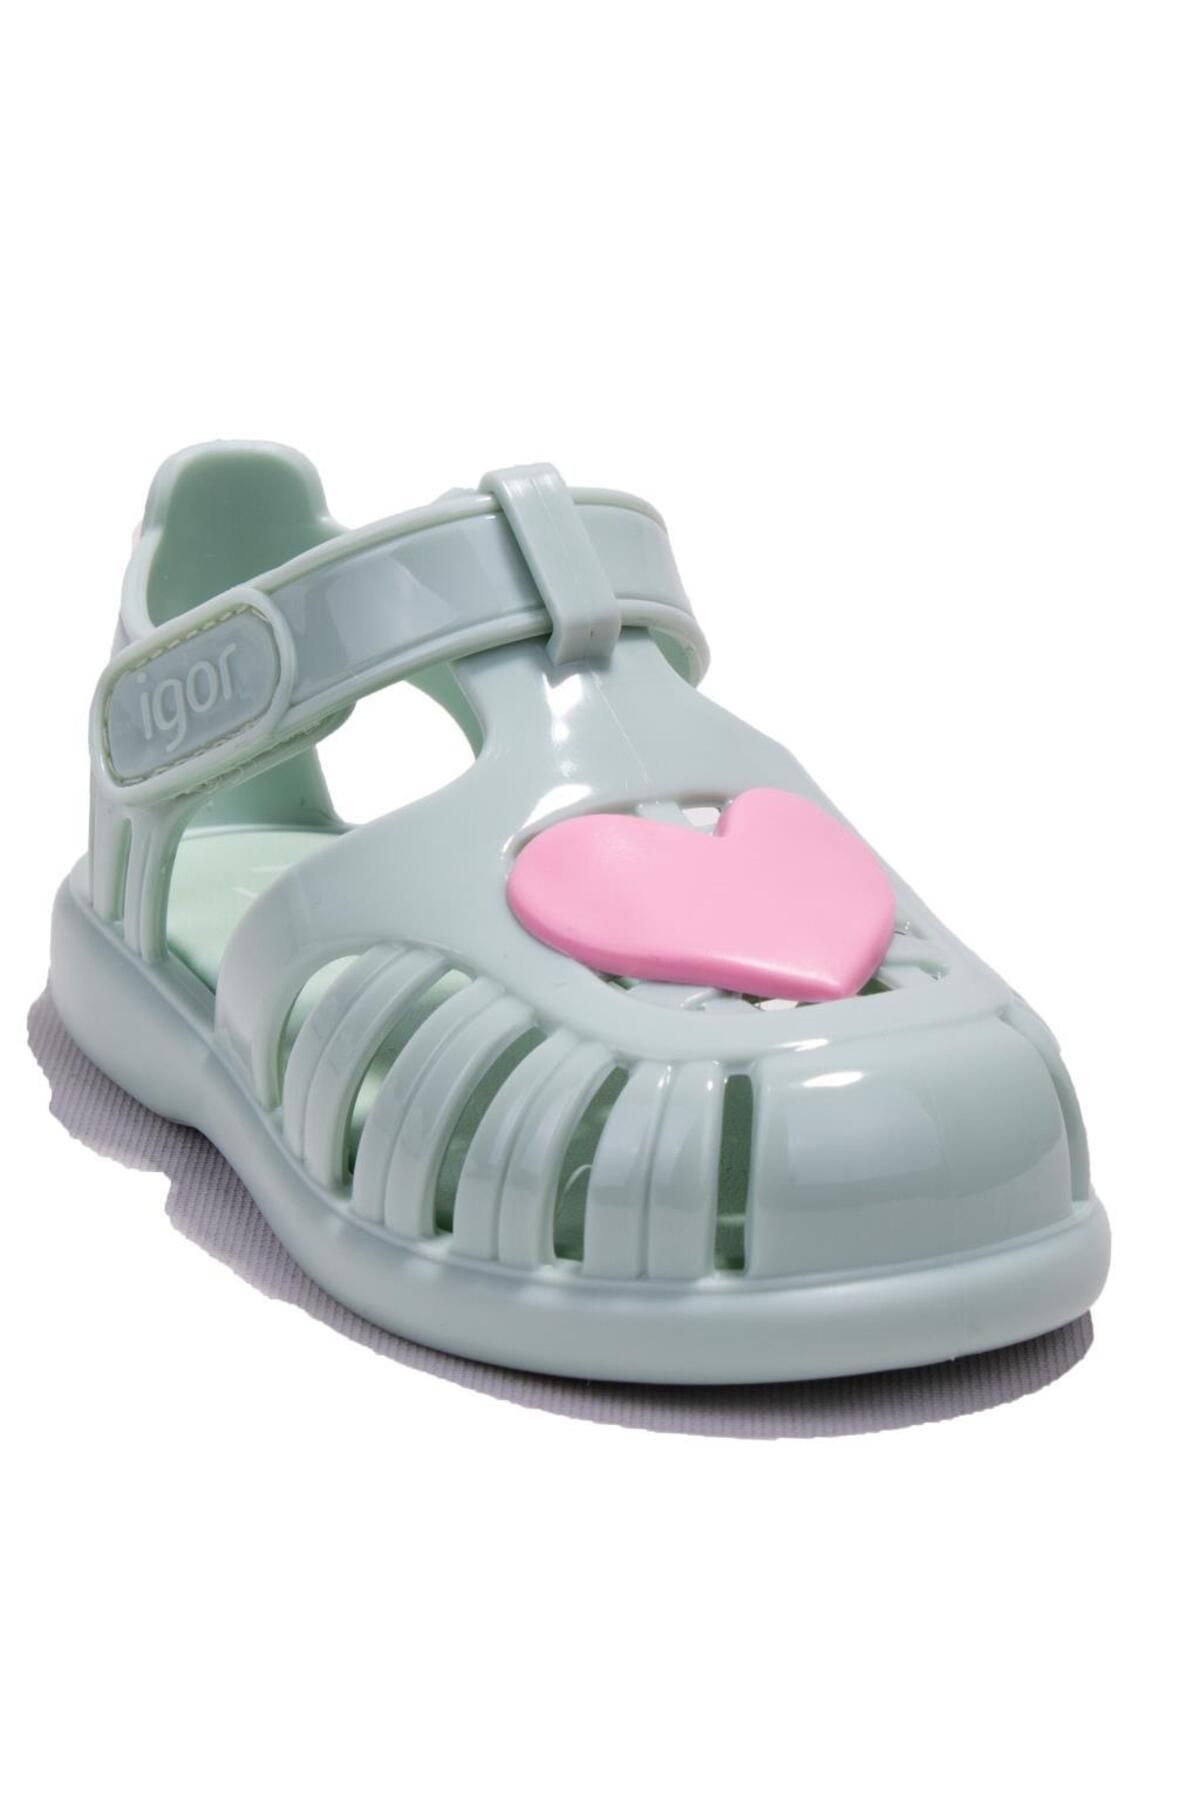 IGOR S10310bb Tobby Gloss Love Mint Ortopedik Günlük Kız Çocuk Sandalet